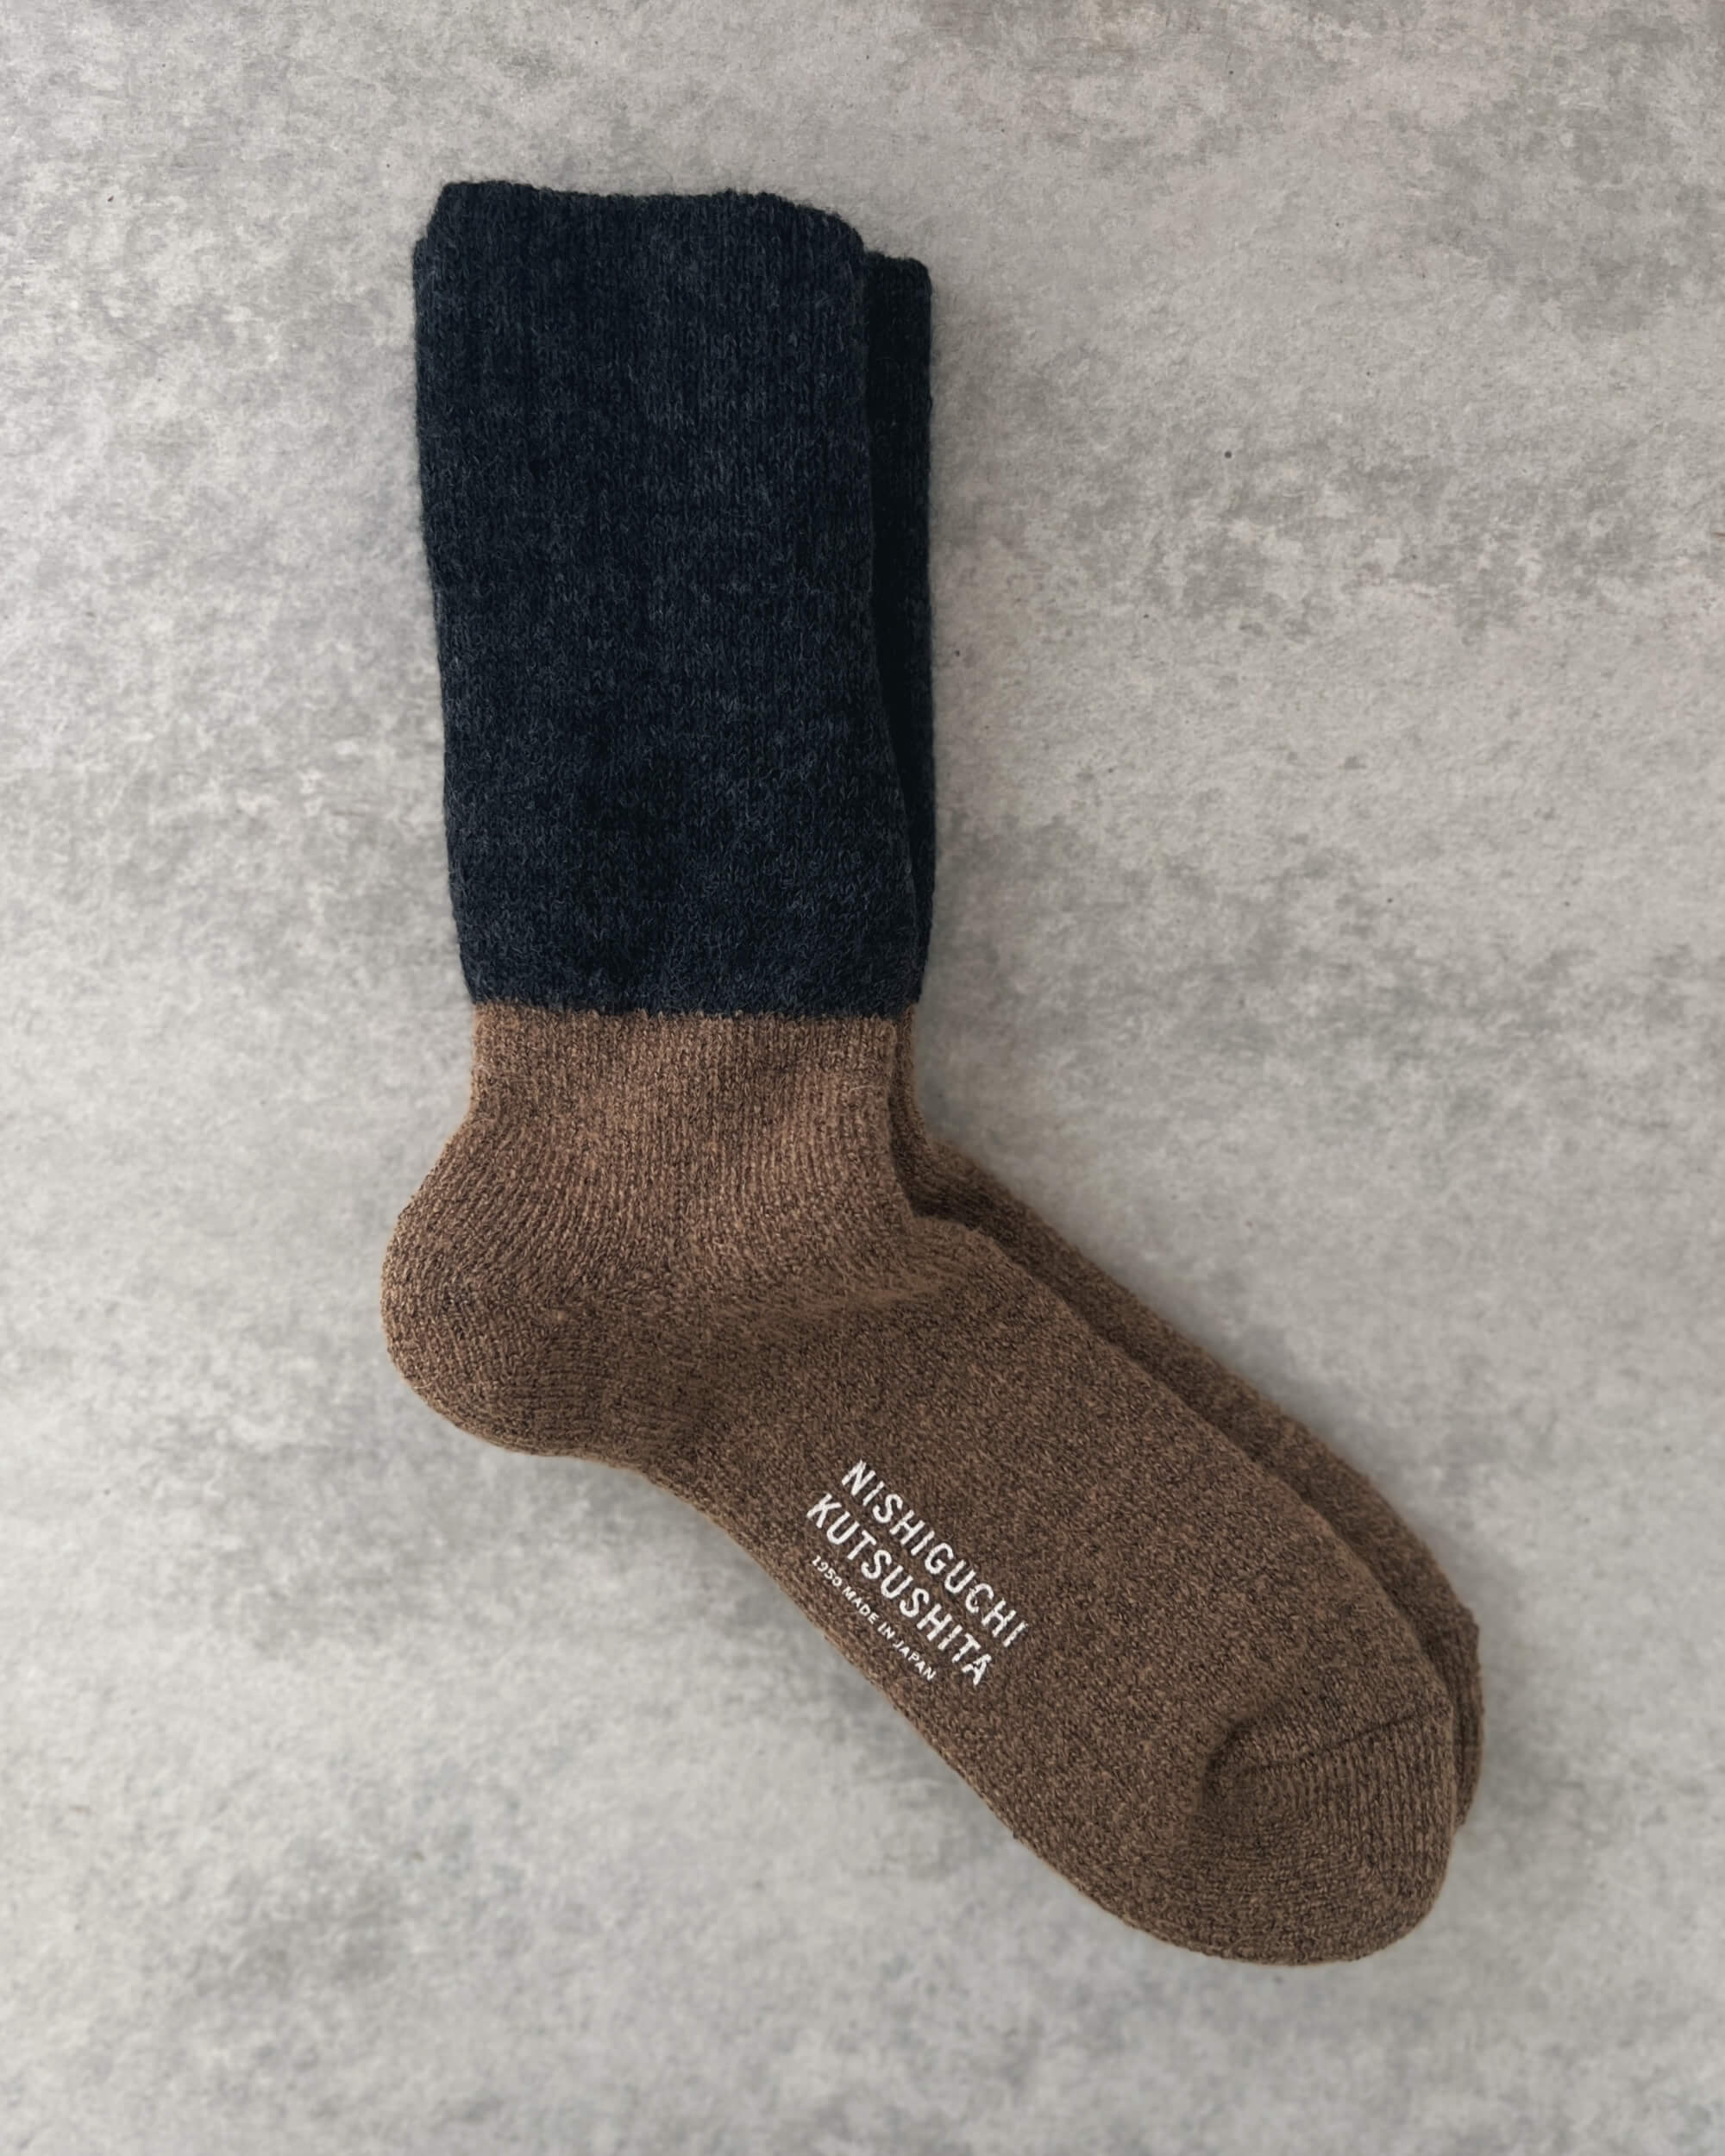 nishiguchi kutsushita : oslo mohair wool pile sock